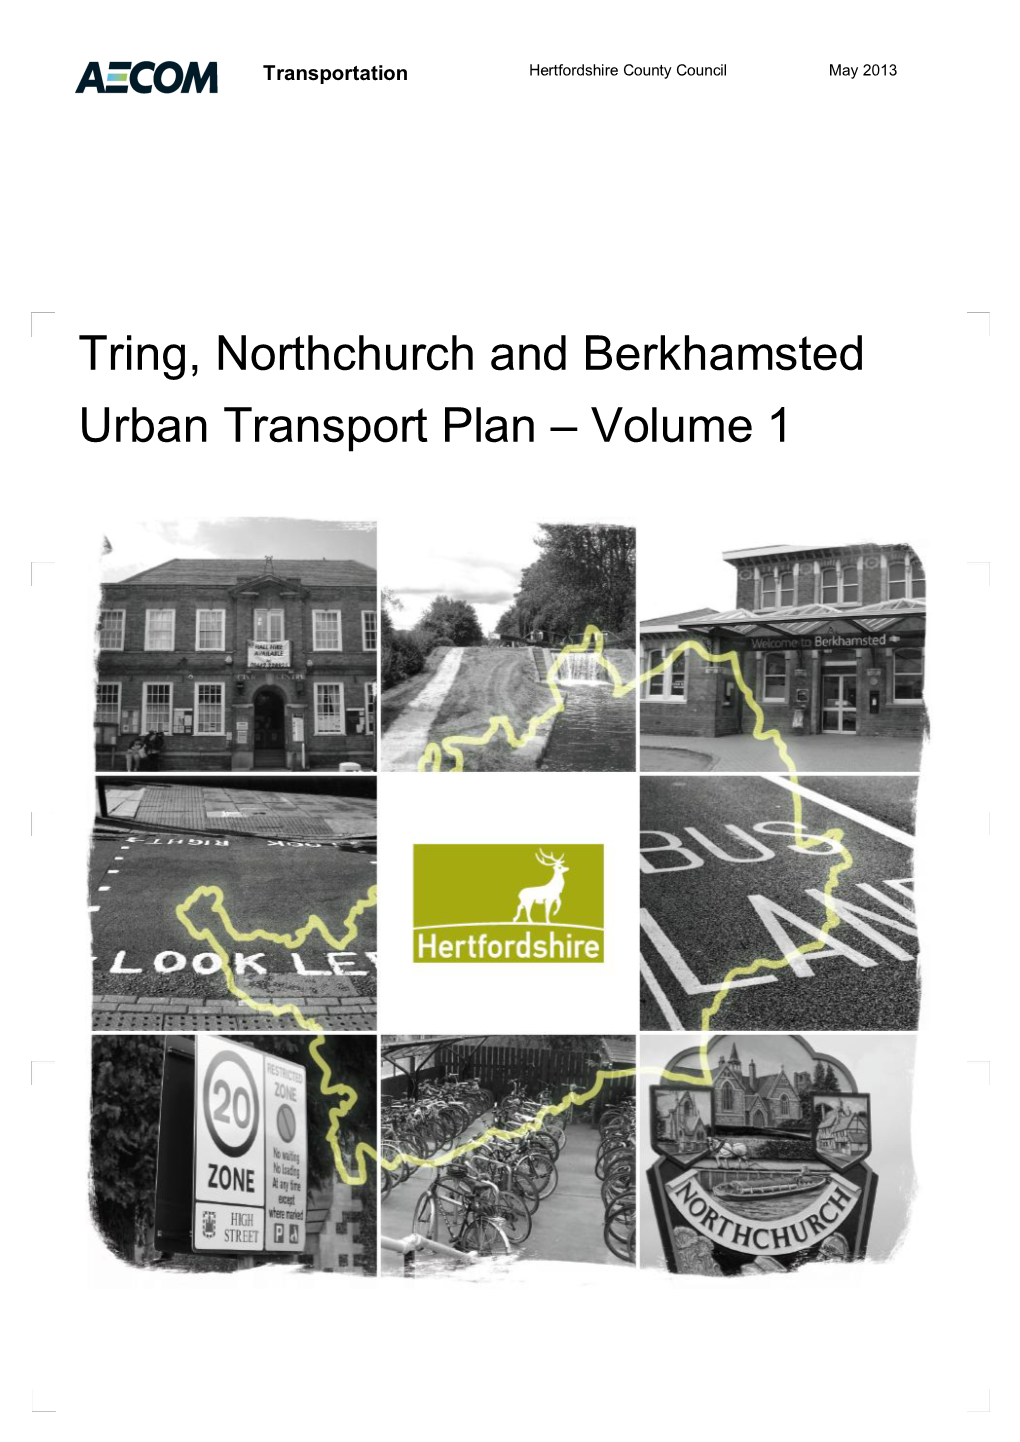 Tring, Northchurch and Berkhamsted Urban Transport Plan – Volume 1 Prepared By: